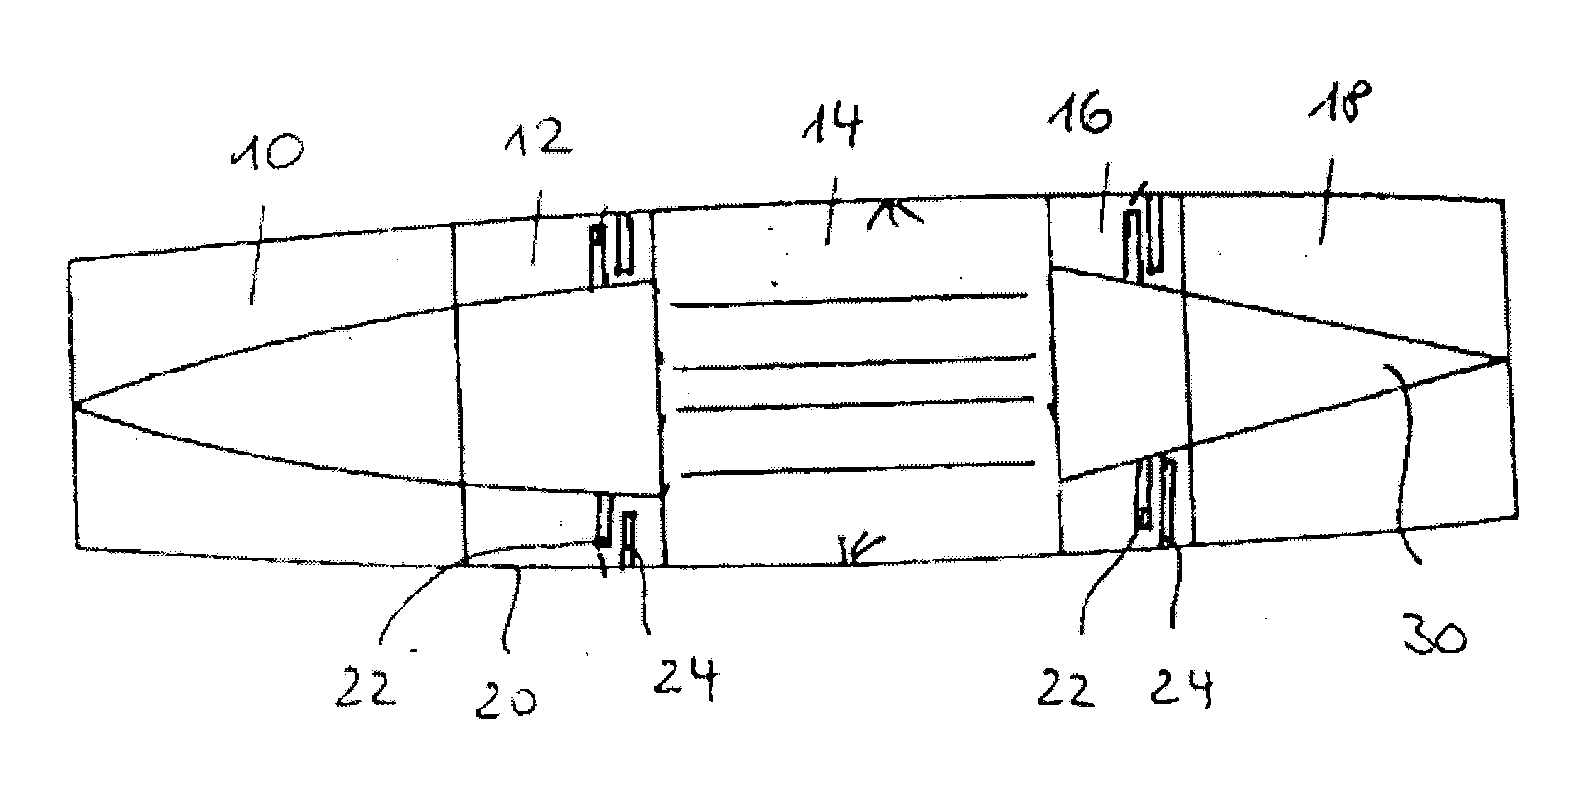 Gas turbine and method for varying the aerodynamic shape of a gas turbine blade